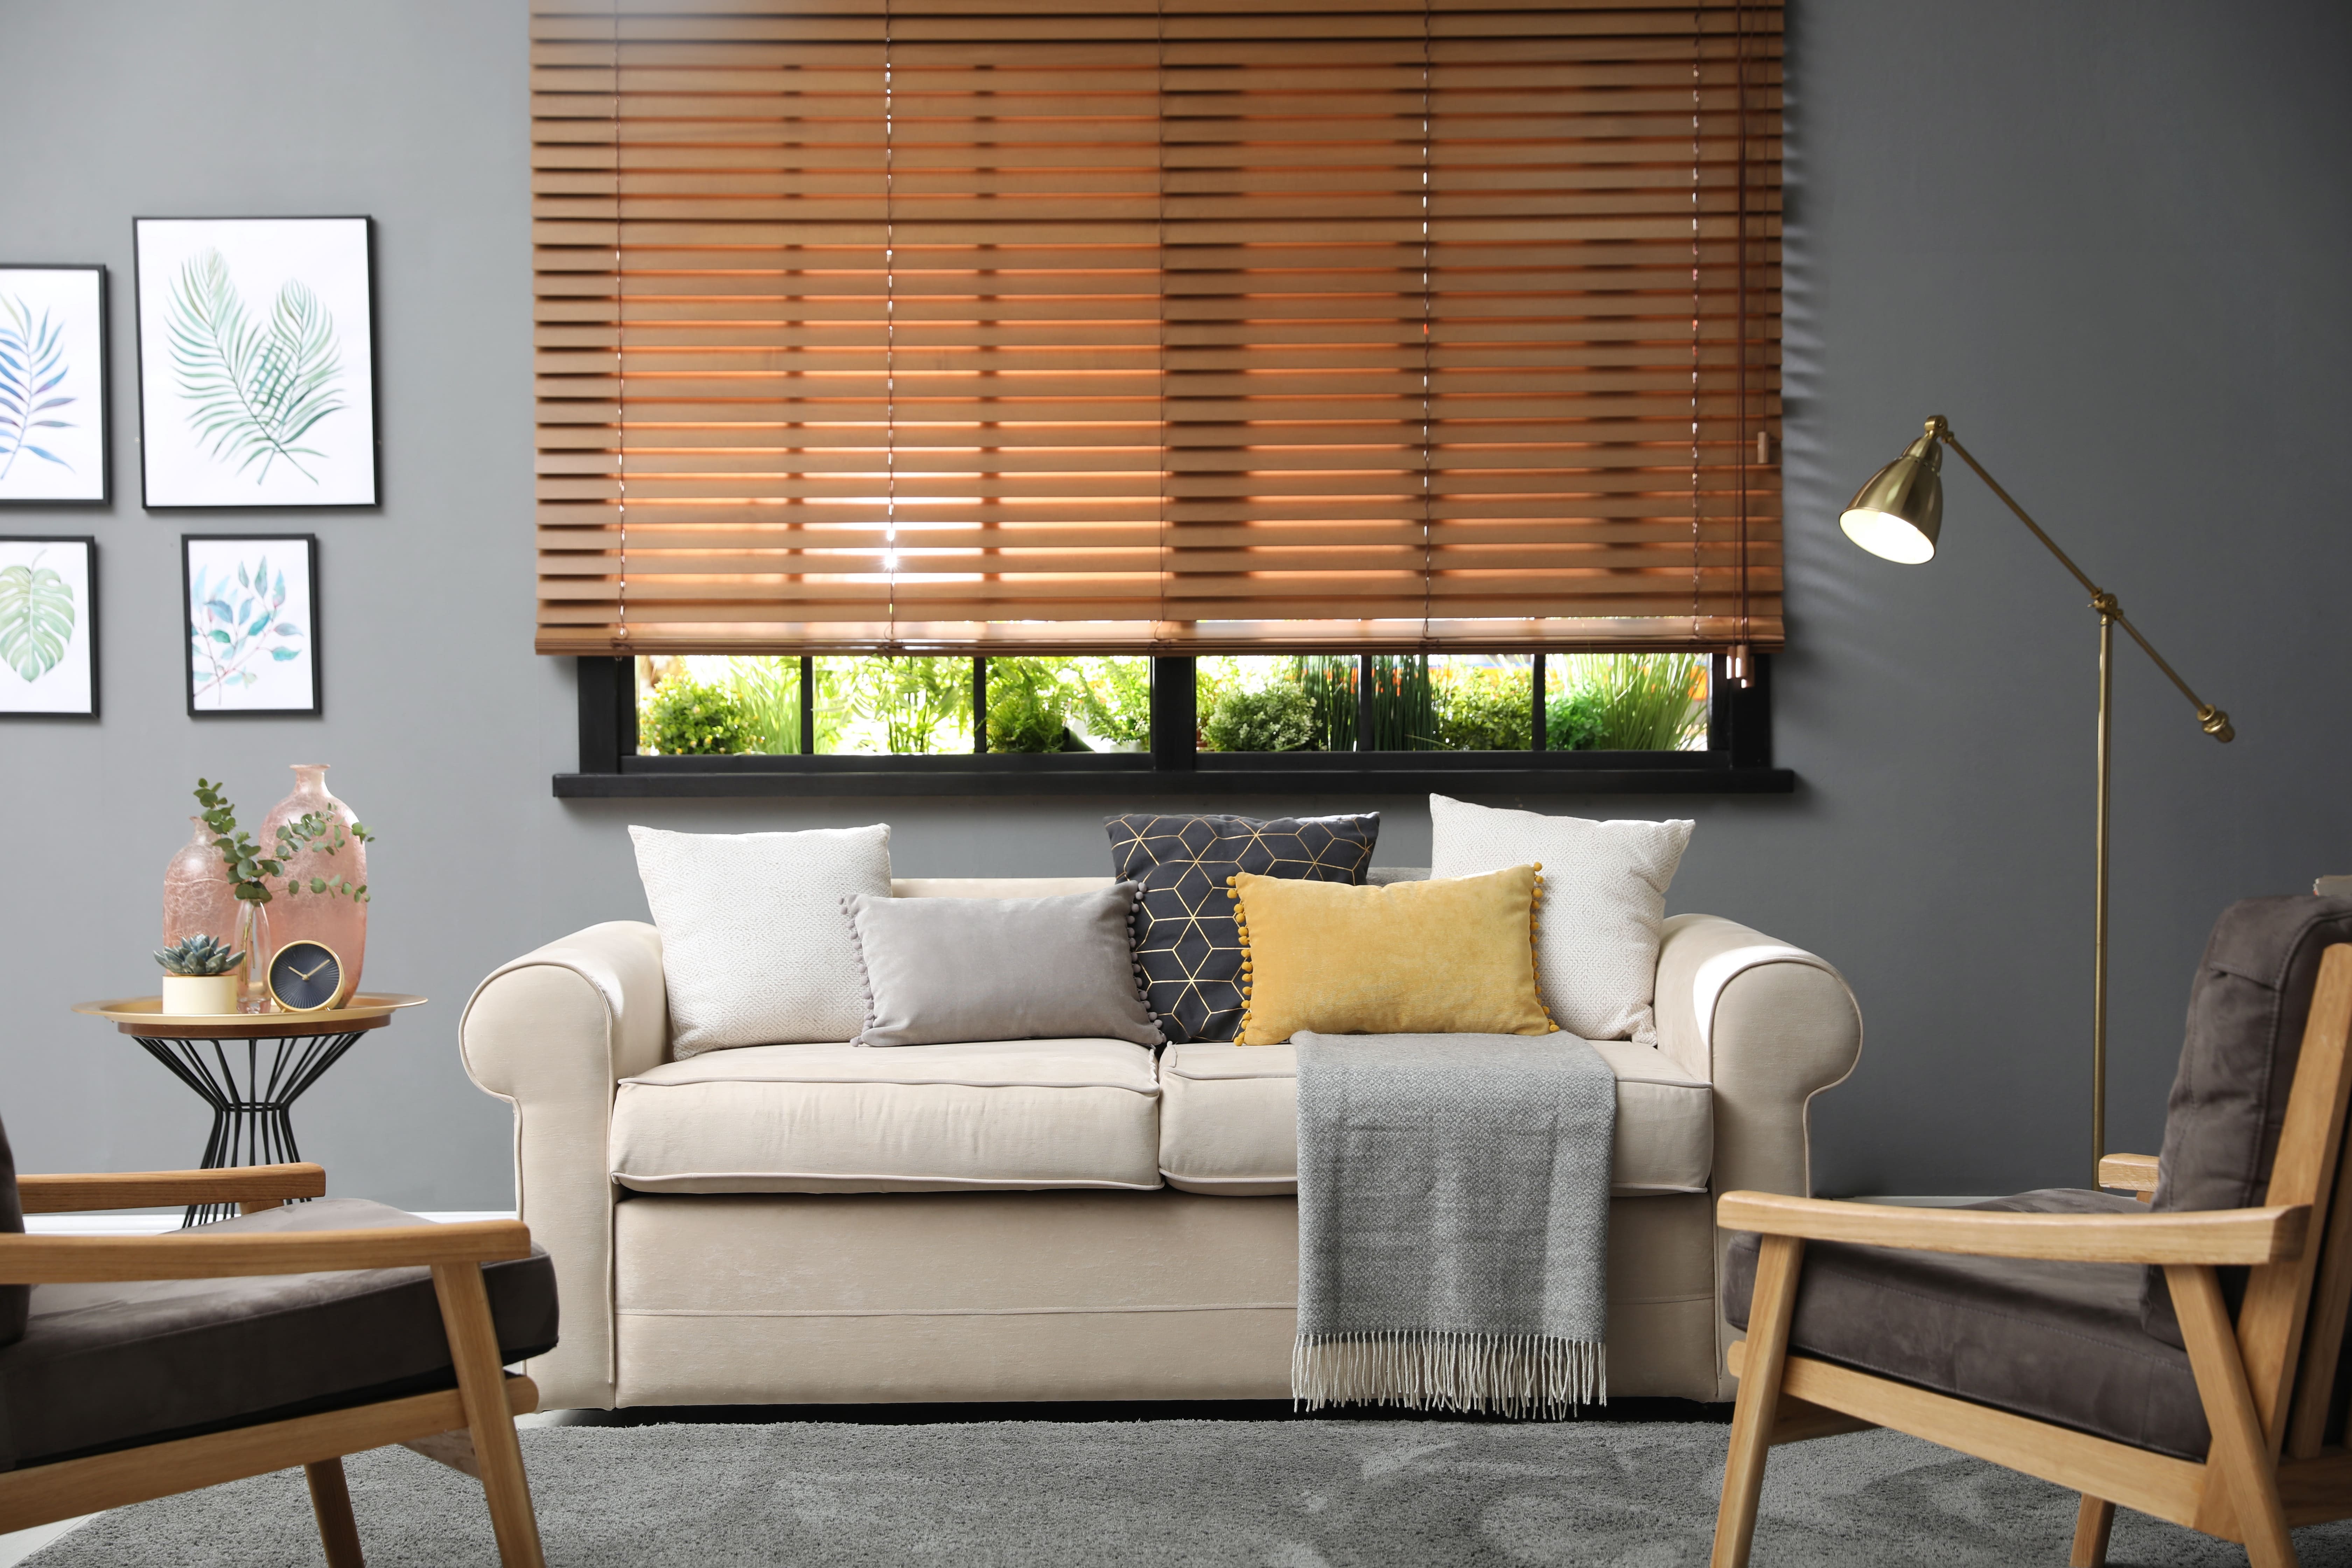 Best home interior designers in Bangalore - Small Living Room Interior Design Ideas for your Home - Decorpot 